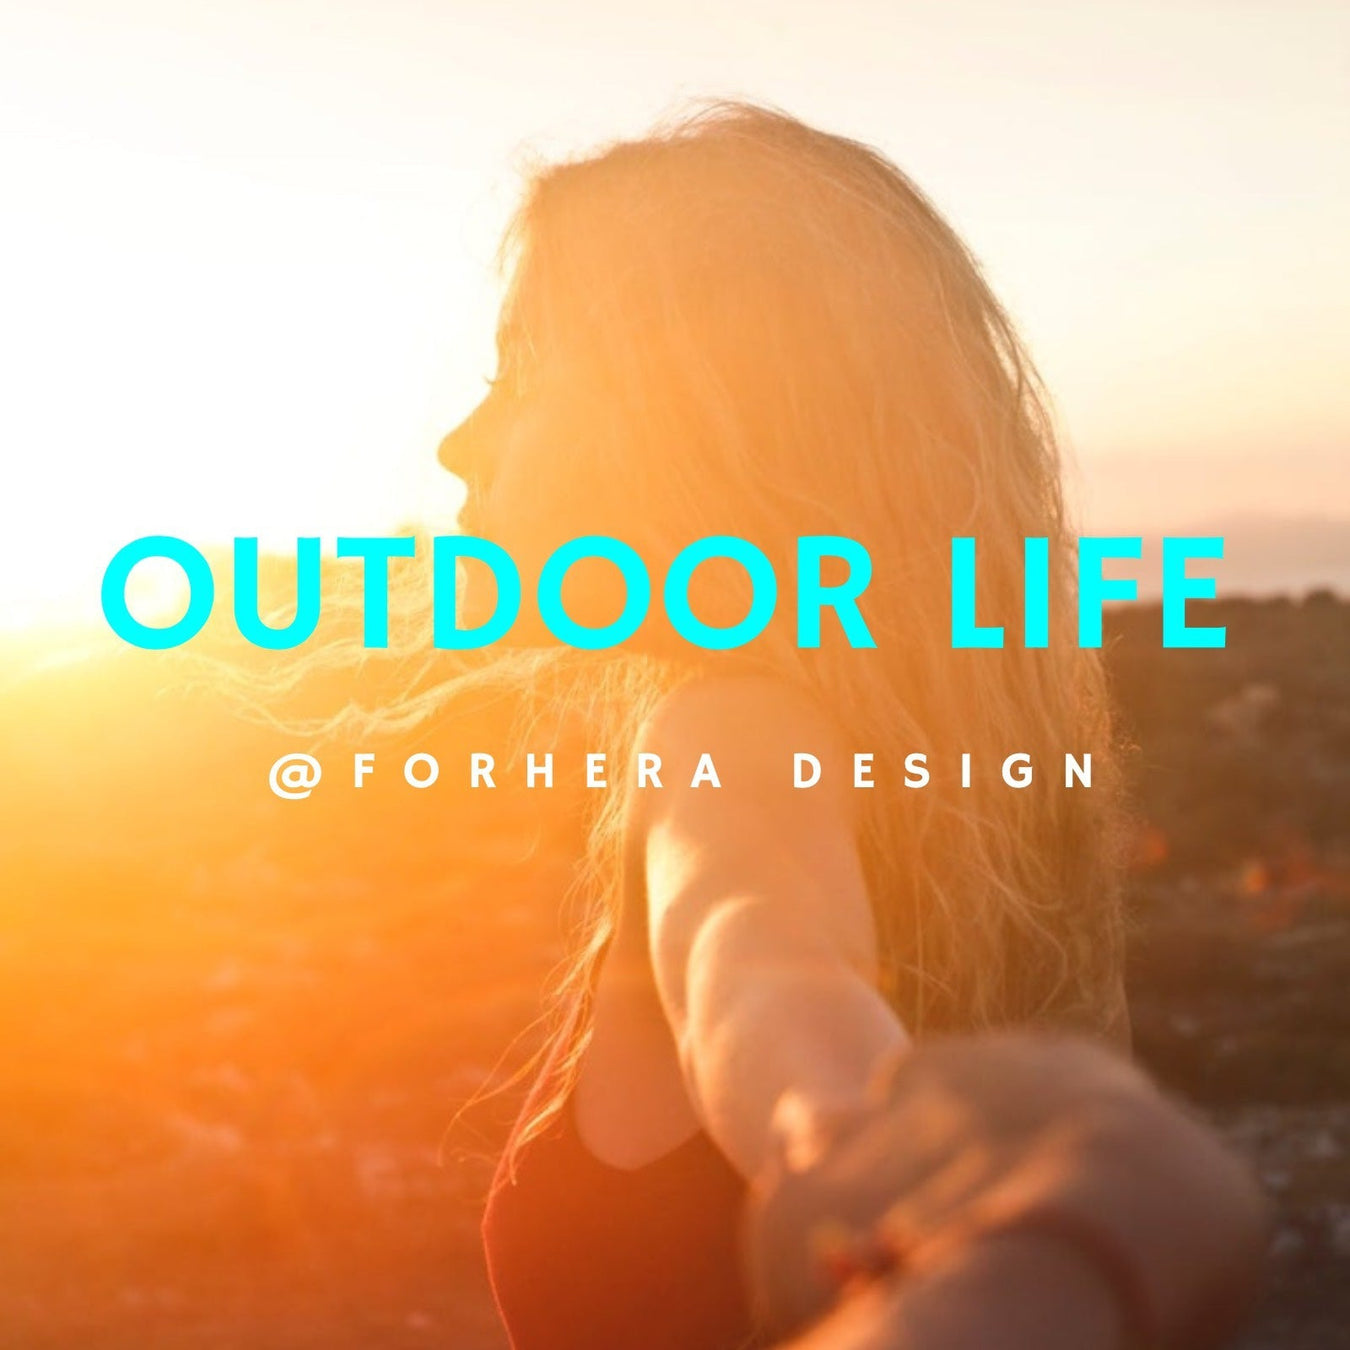 Outdoor life